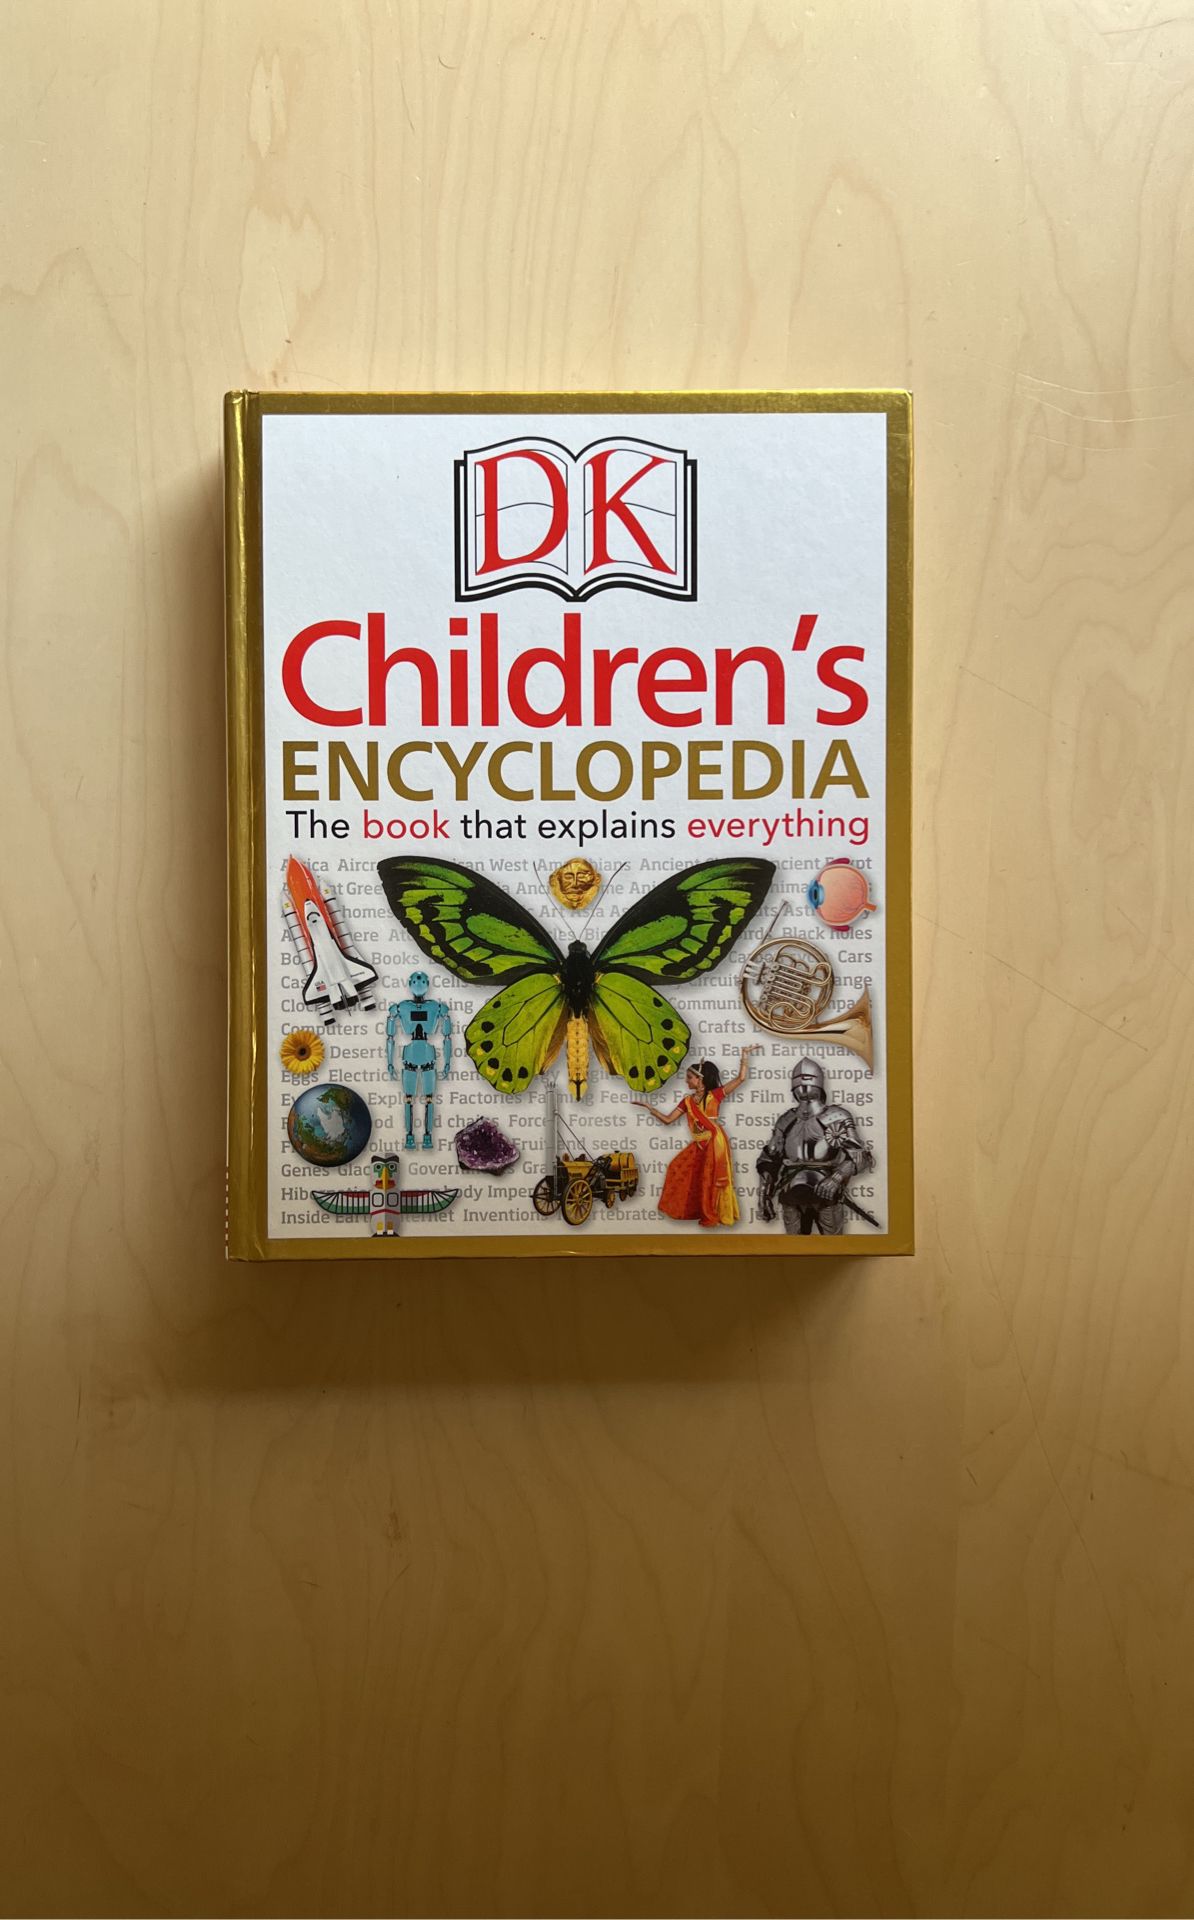 DK Children’s Encyclopedia